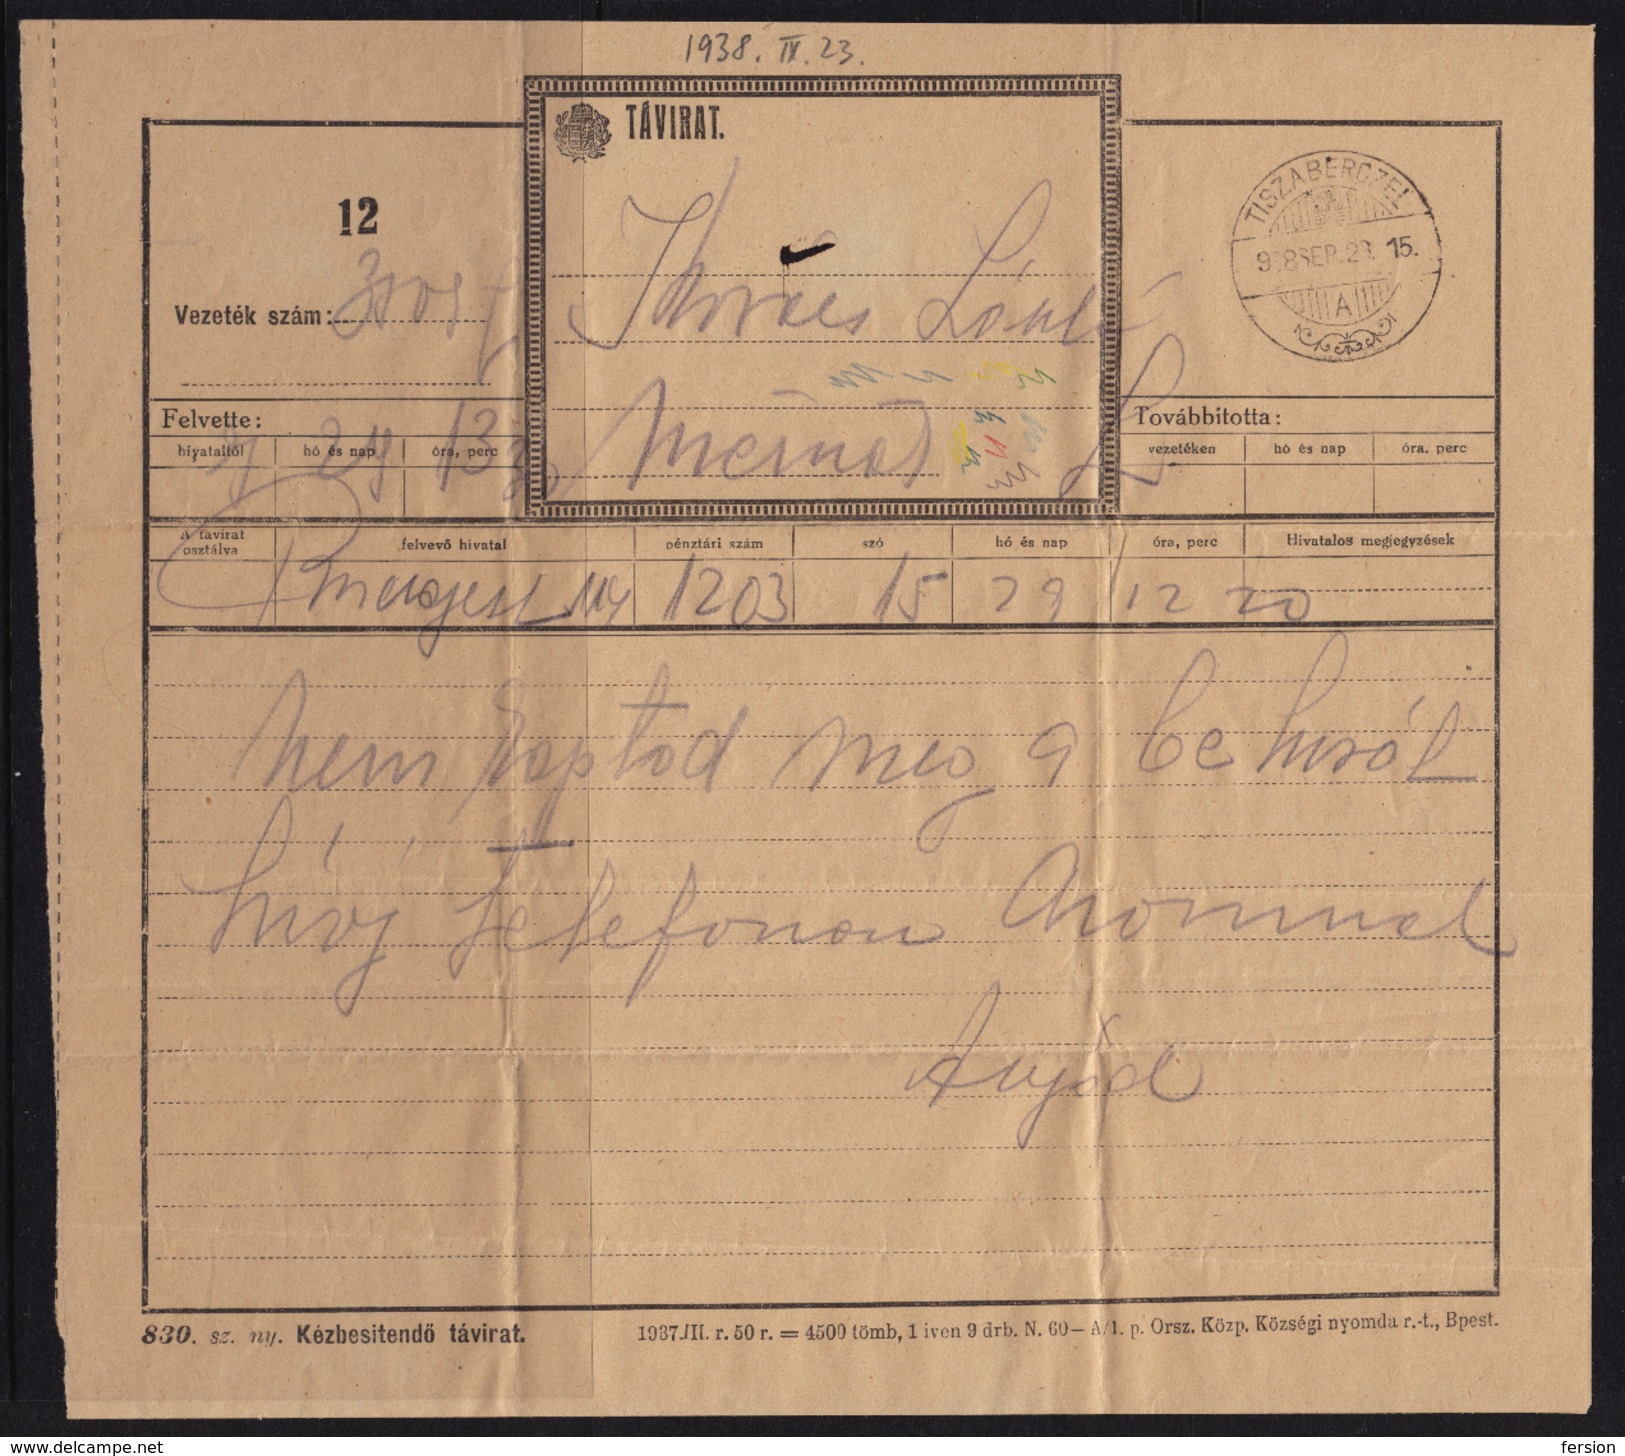 TELEGRAPH TELEGRAM 1938 Hungary - Tiszaberczel - Telegrafi